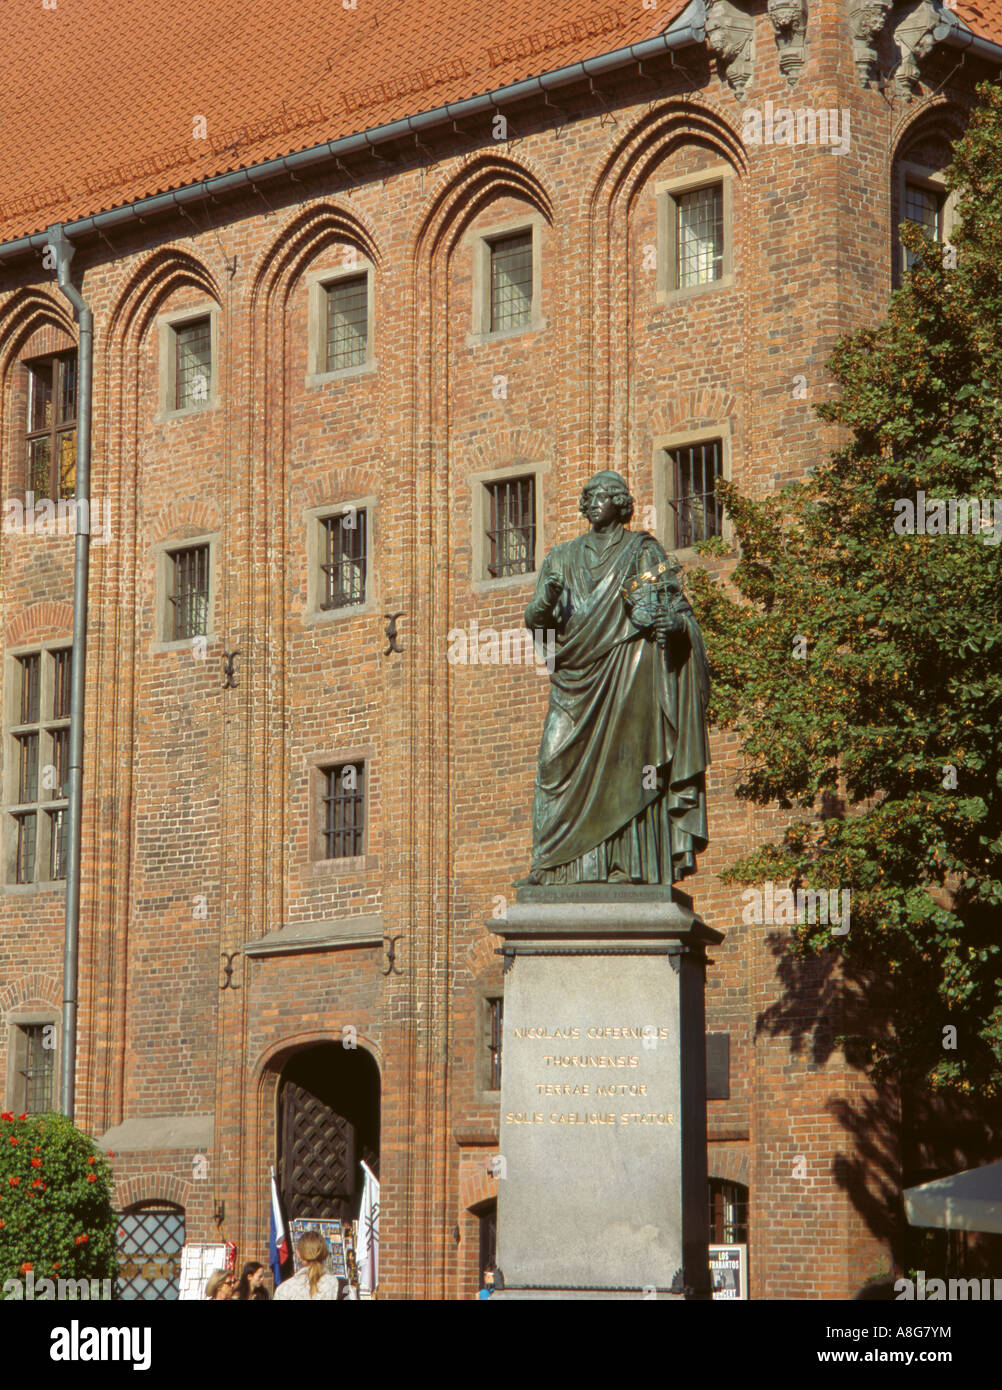 Statue of Mikolaj Kopernik (Nicolaus Copernicus), Rynek Staromiejski (Old Town Square), Torun, Pomerania, Poland. Stock Photo